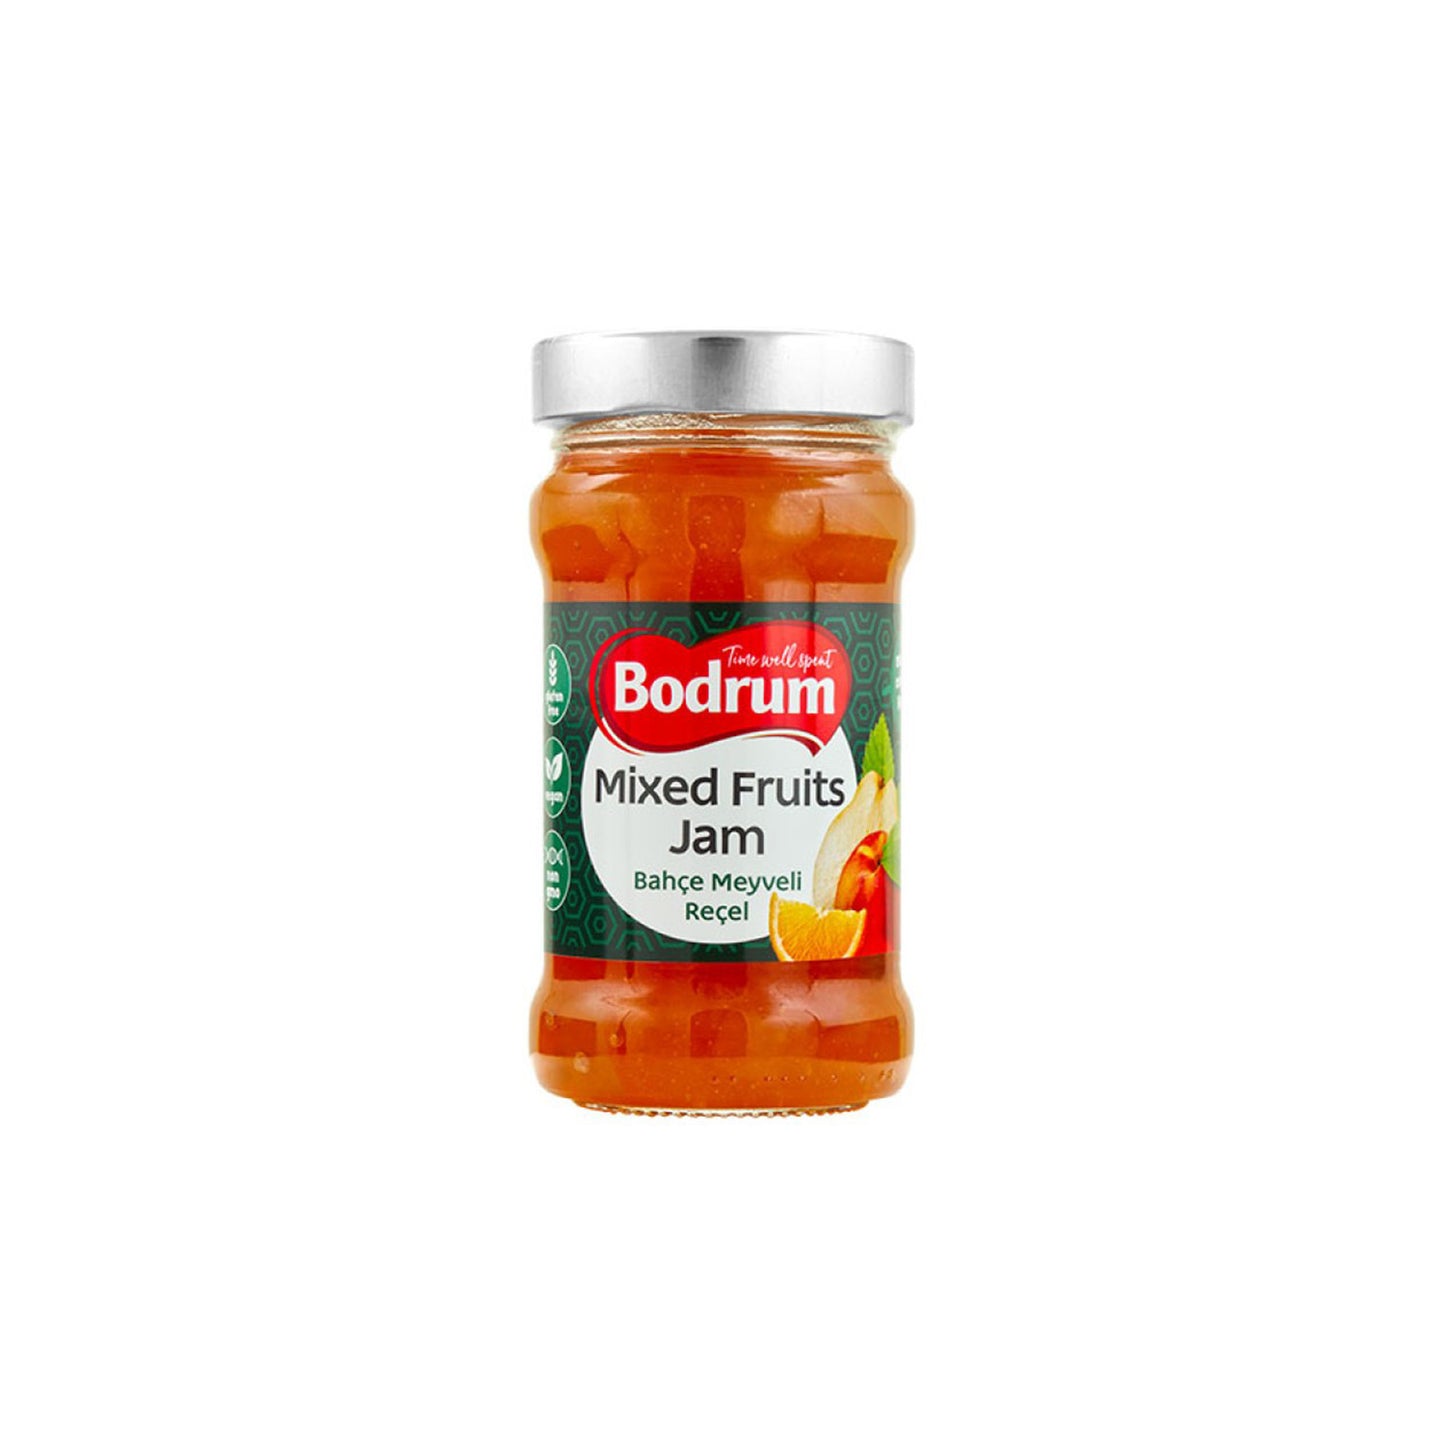 Bodrum Mixed Fruits Jam 380g